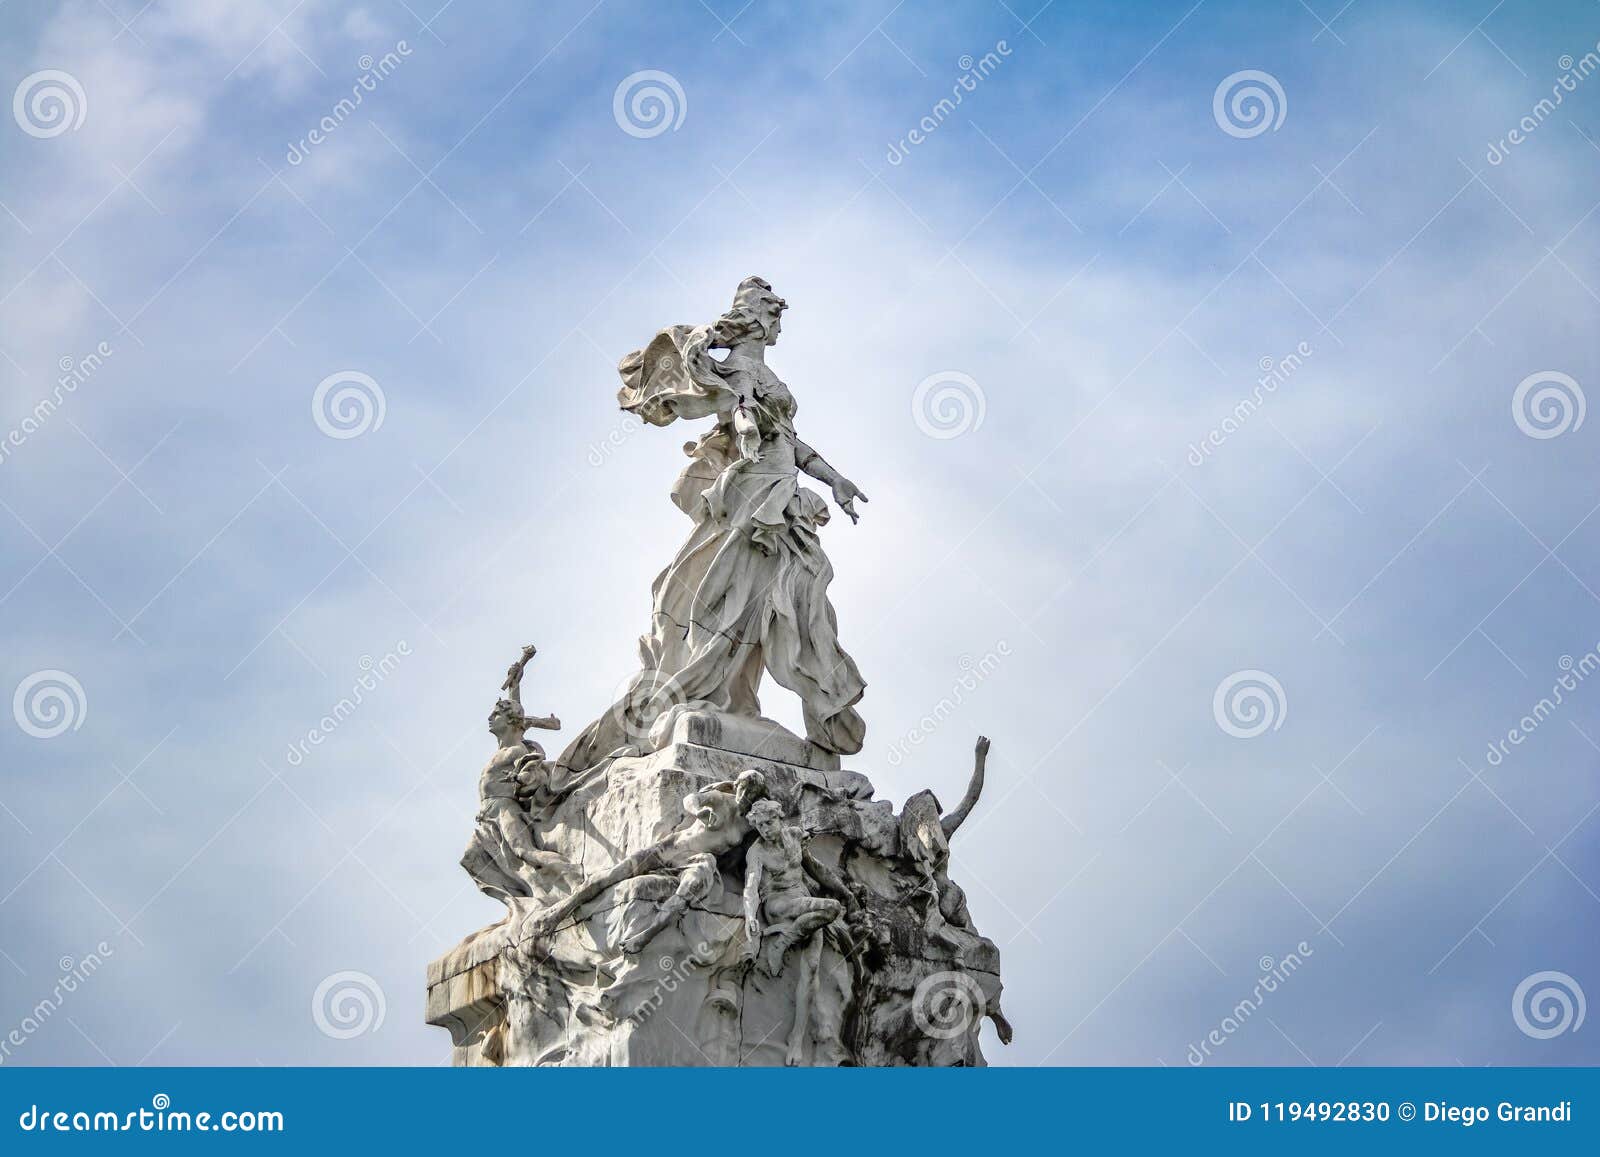 monument to the spaniards monumento de los espanoles in palermo - buenos aires, argentina